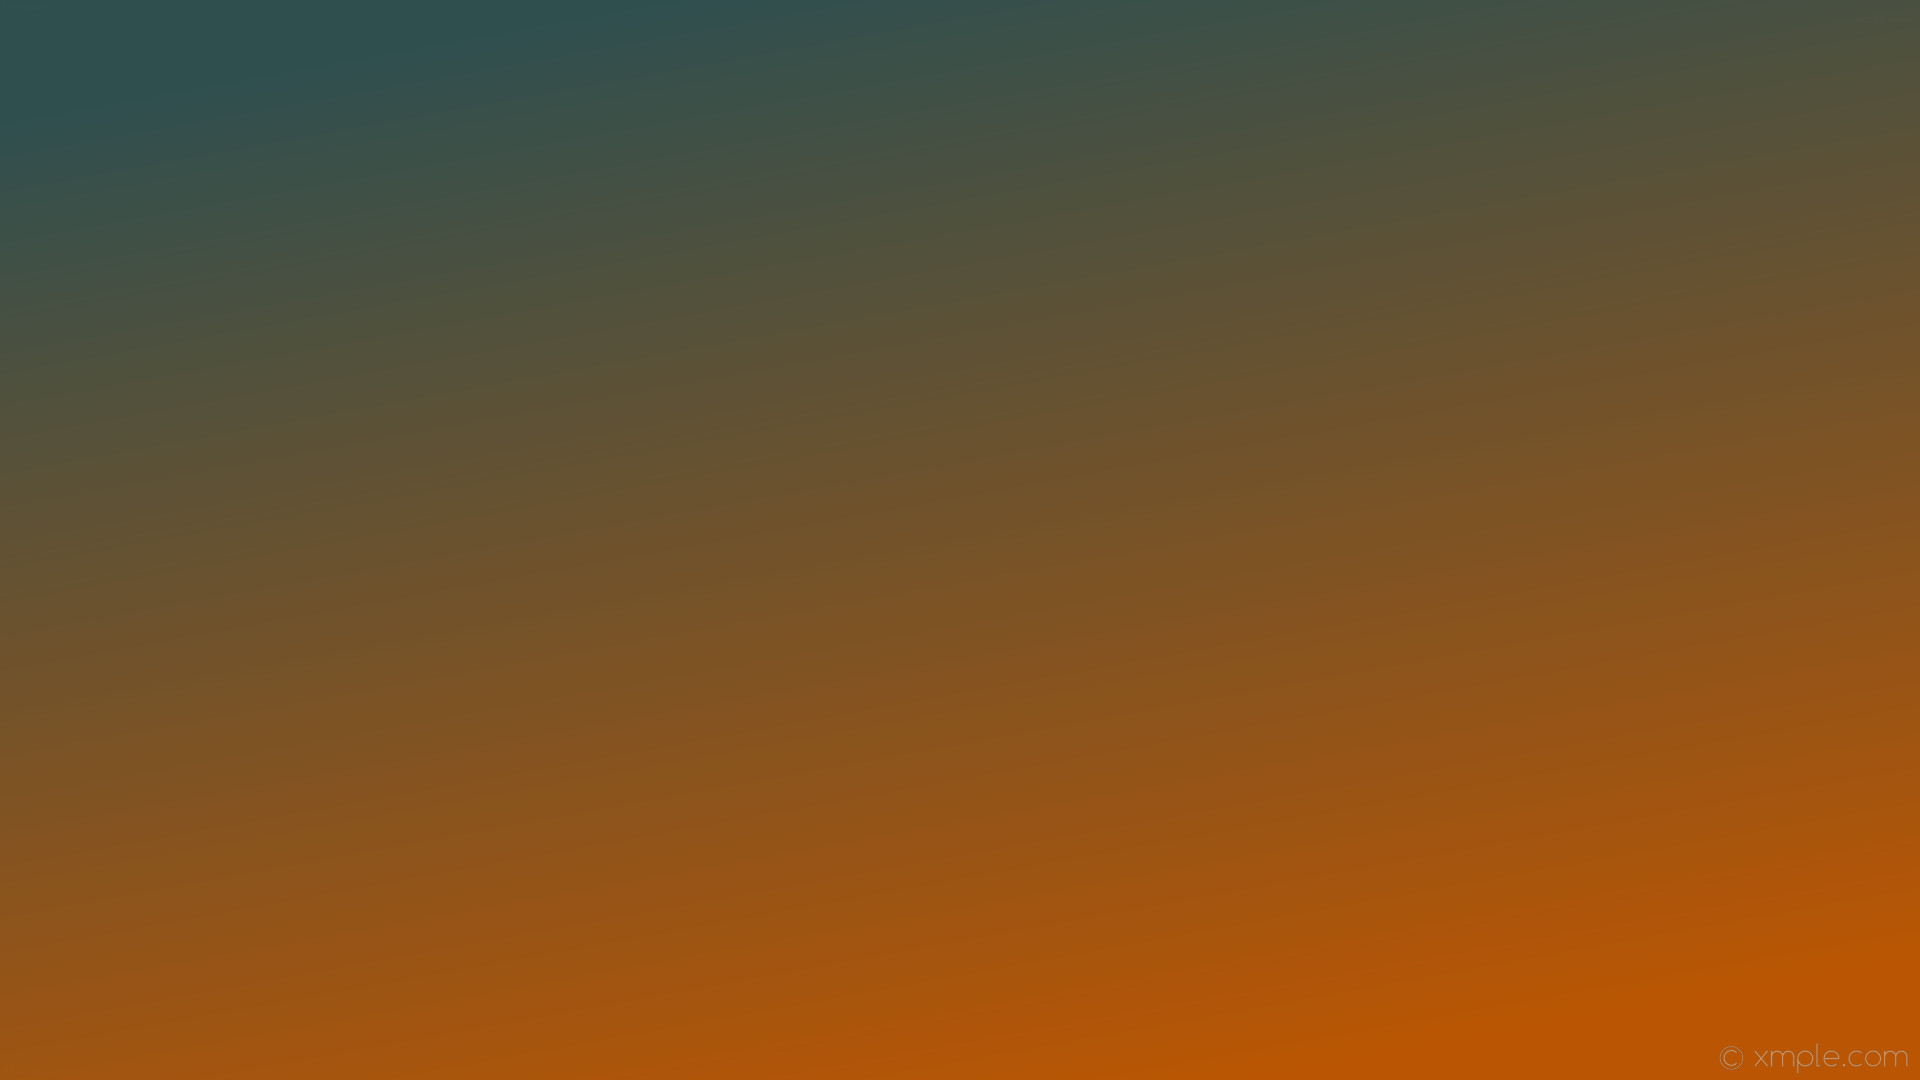 1920x1080 wallpaper orange grey gradient linear dark slate gray #ba5603 #2f4f4f 300Â°